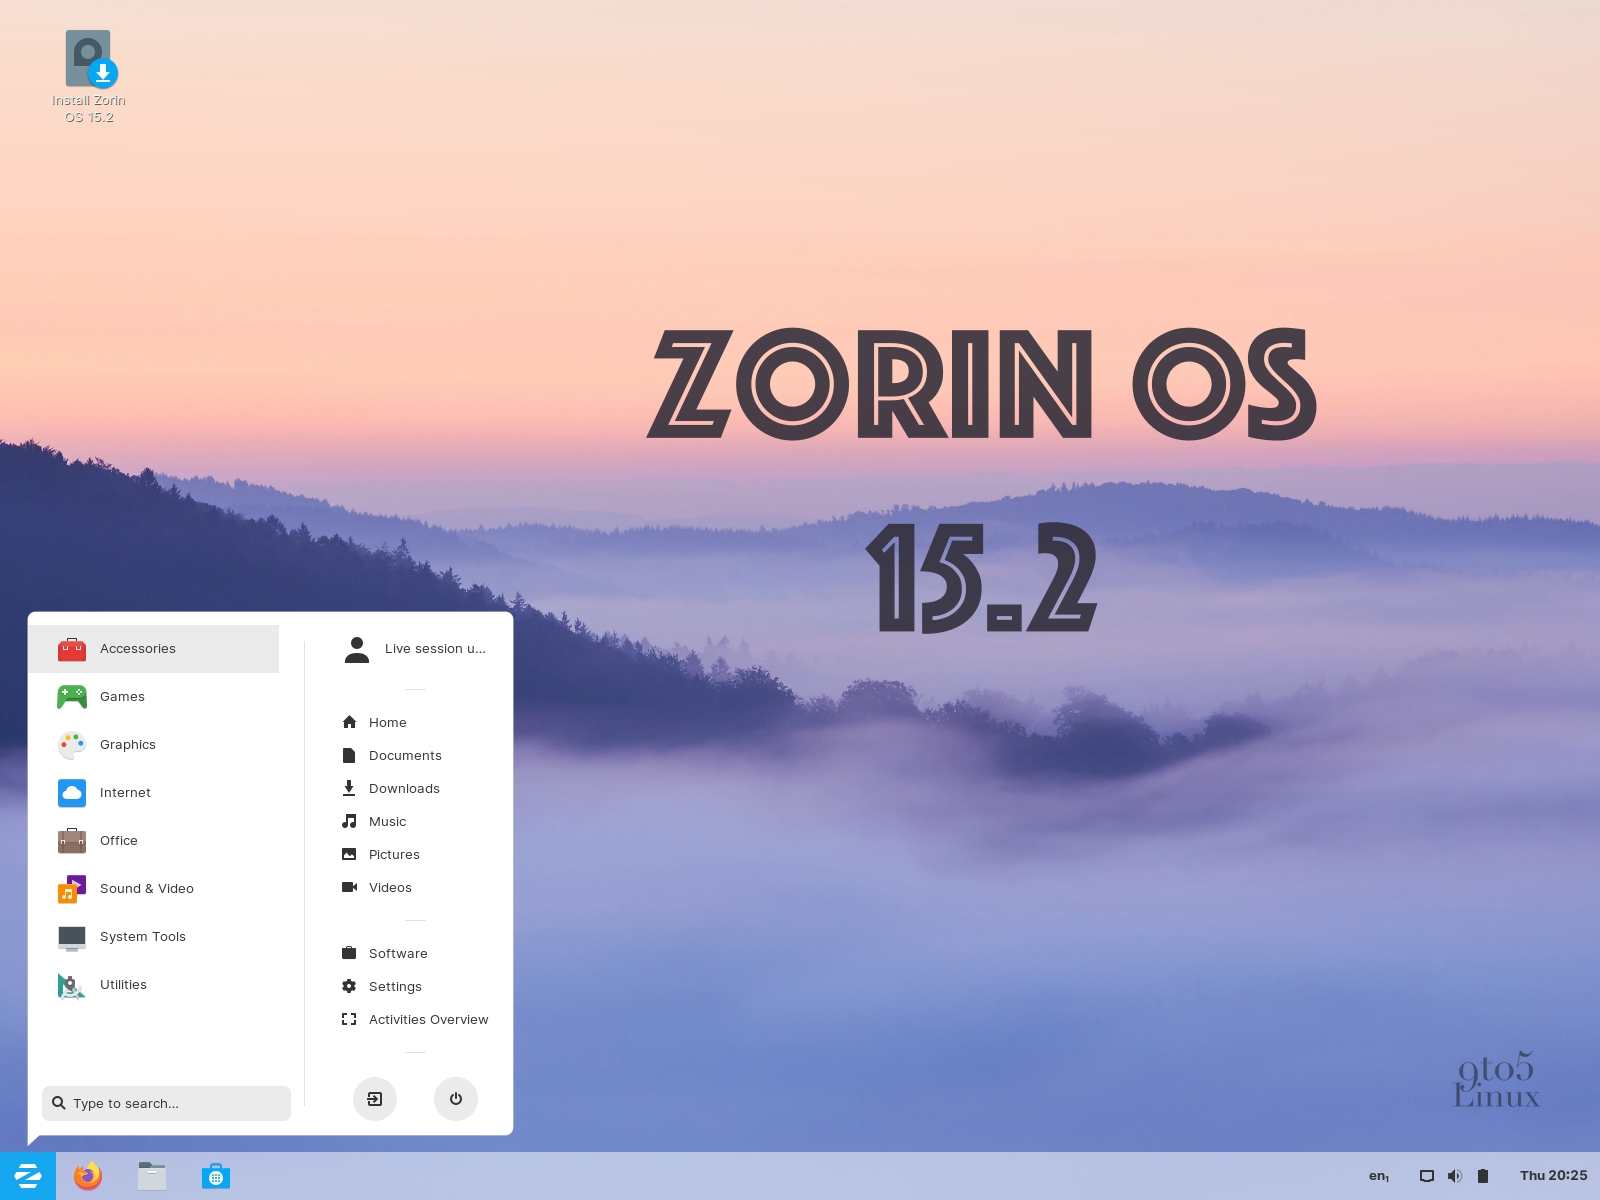 Zorin OS 15.2 Released, Based on Ubuntu 18.04.4 LTS